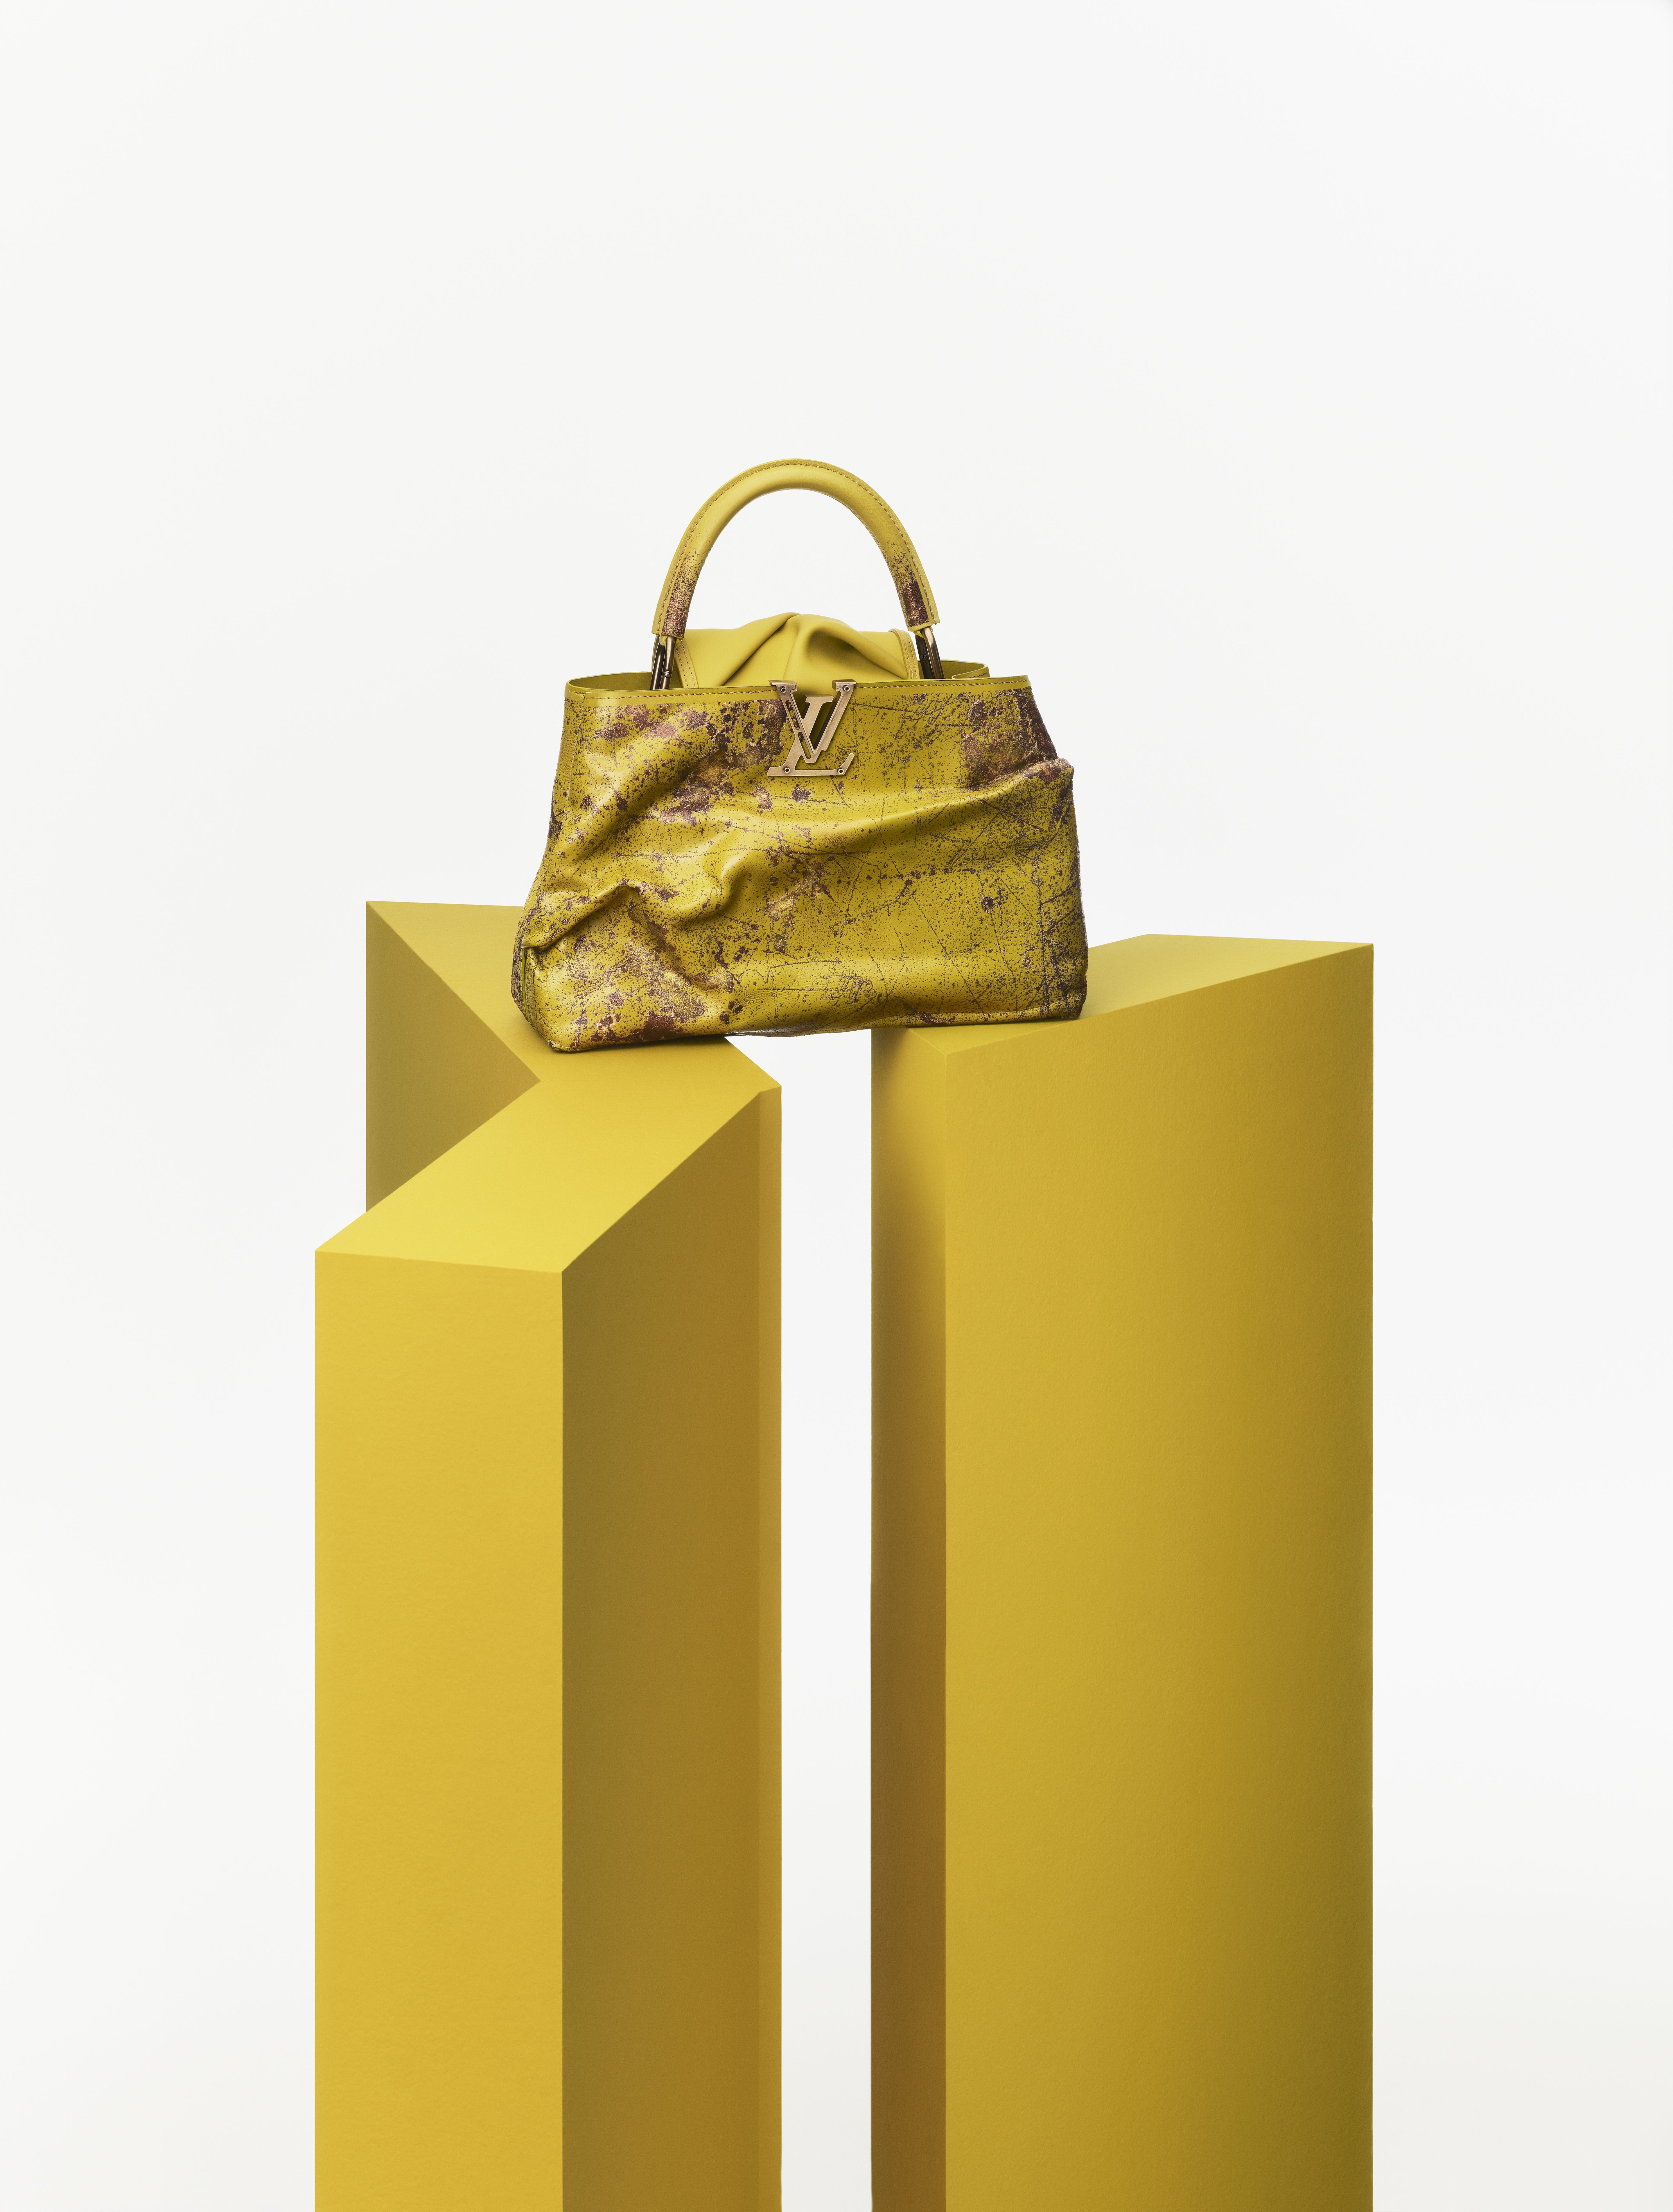 Louis Vuitton predstavio kolekciju torbi Artycapucines 2023